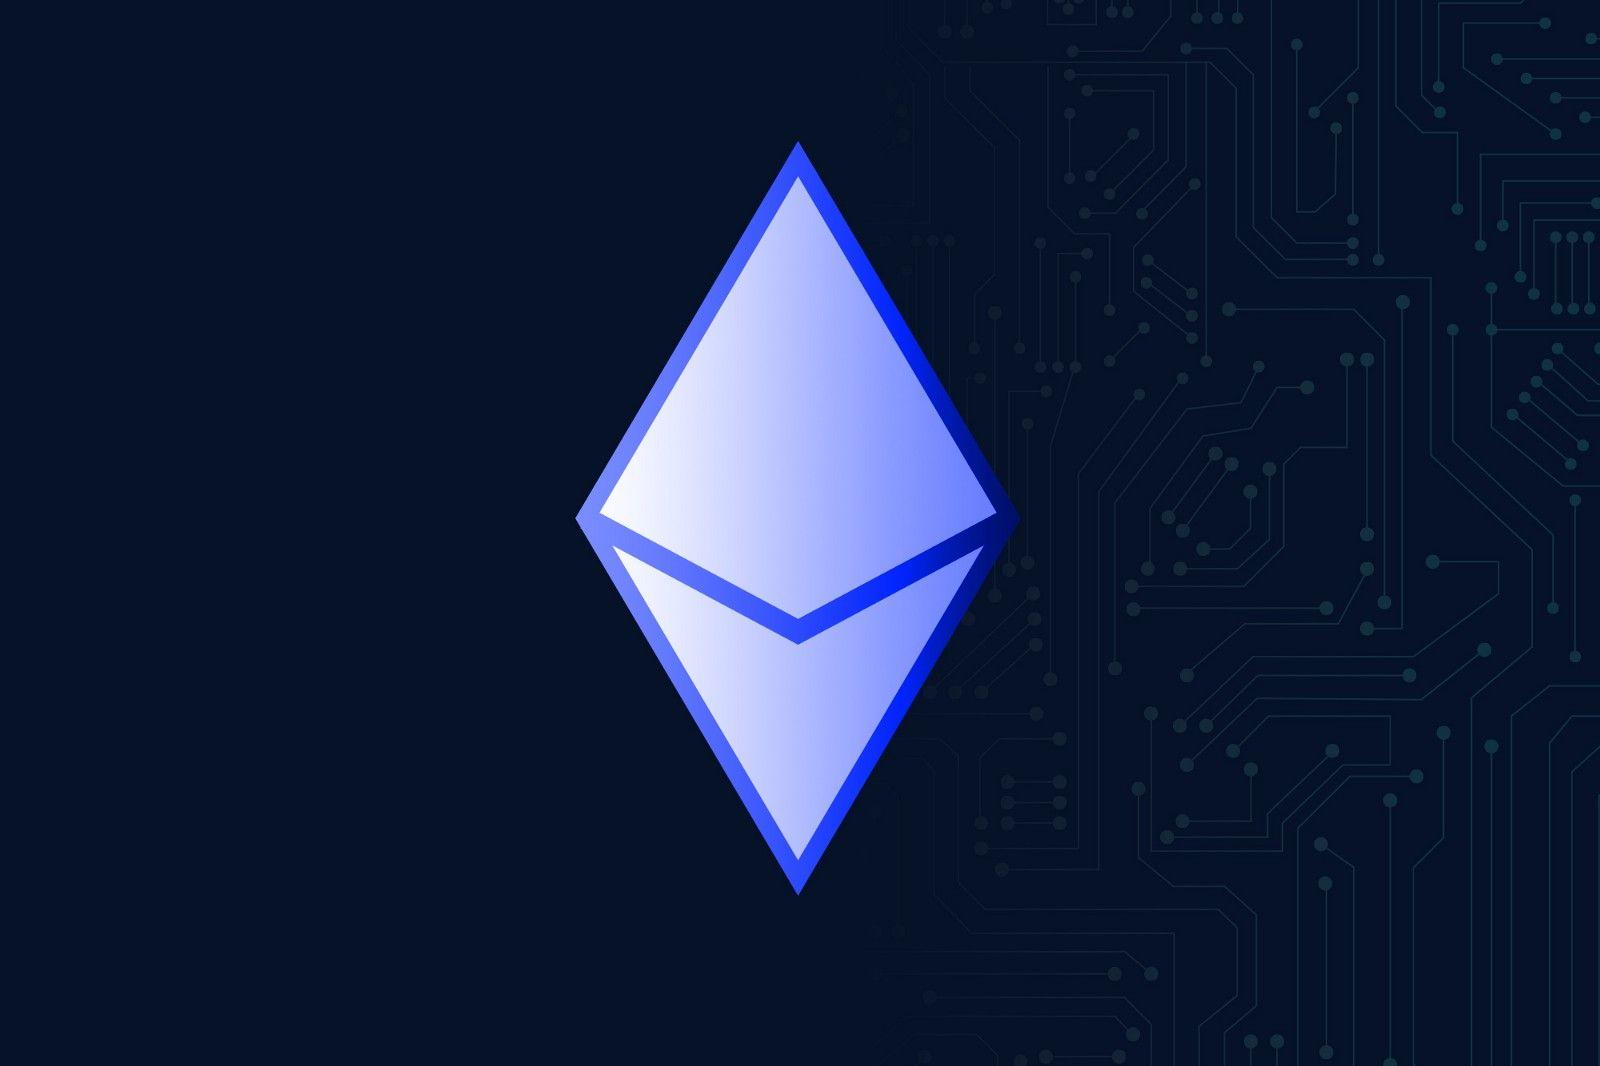 Etherium Blockchain Logo - Web developer, welcome to Ethereum